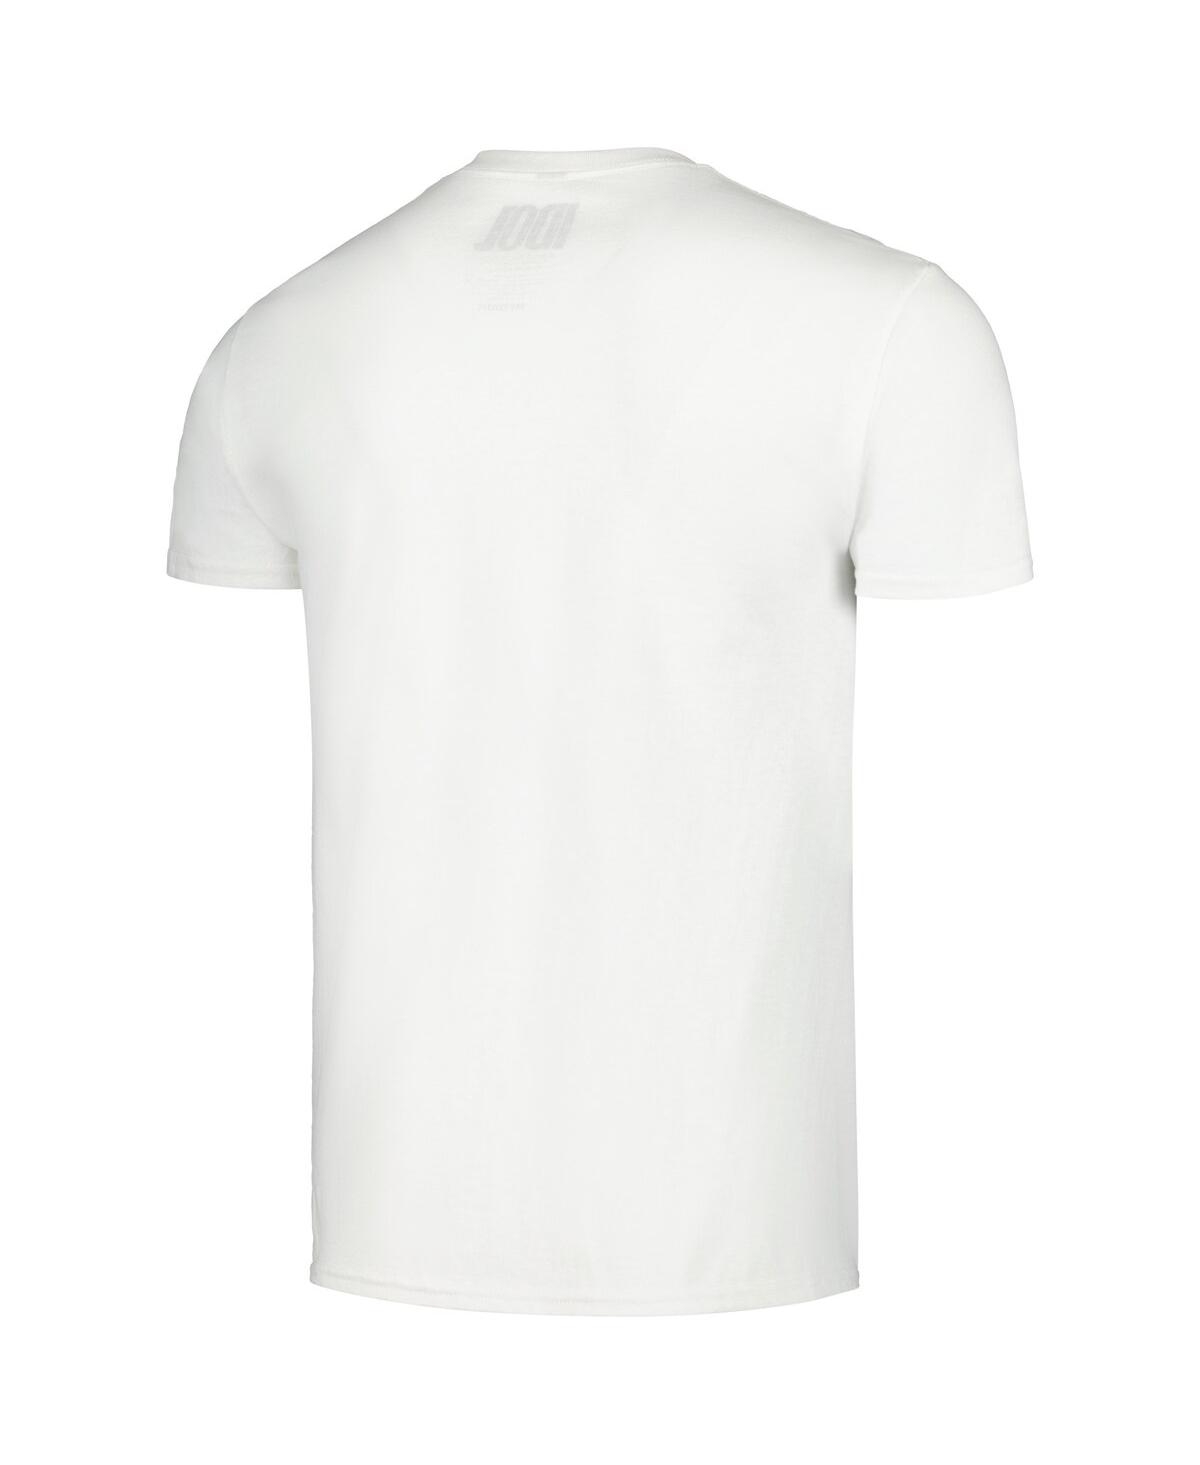 Shop Manhead Merch Men's White Billy Idol T-shirt